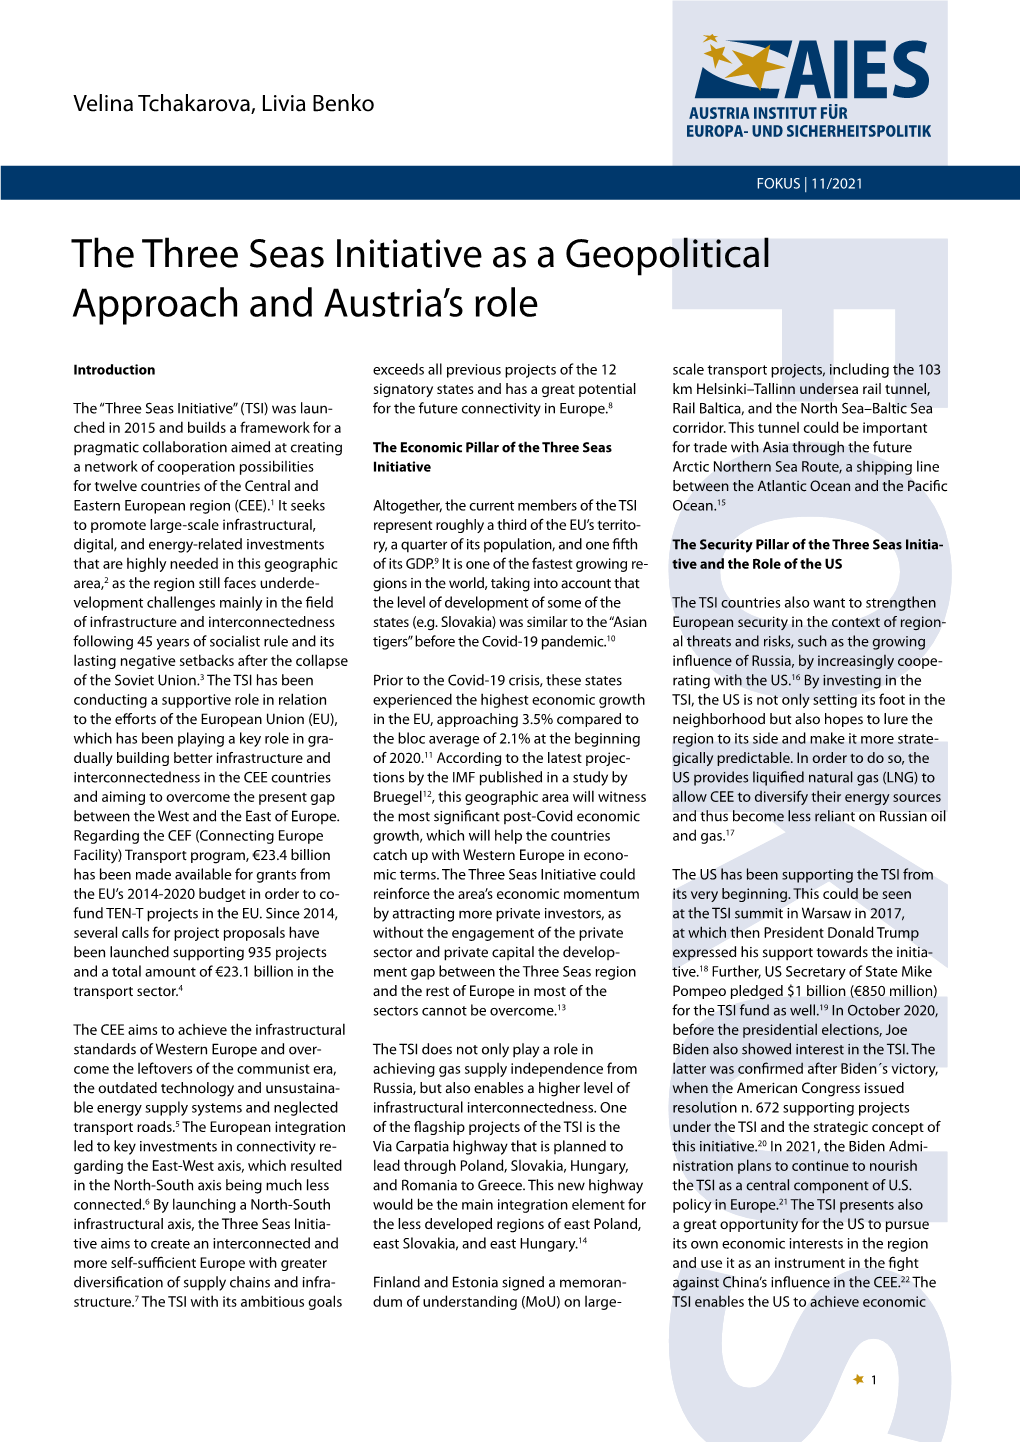 The Three Seas Initiative As a Geopolitical Approach and Austria's